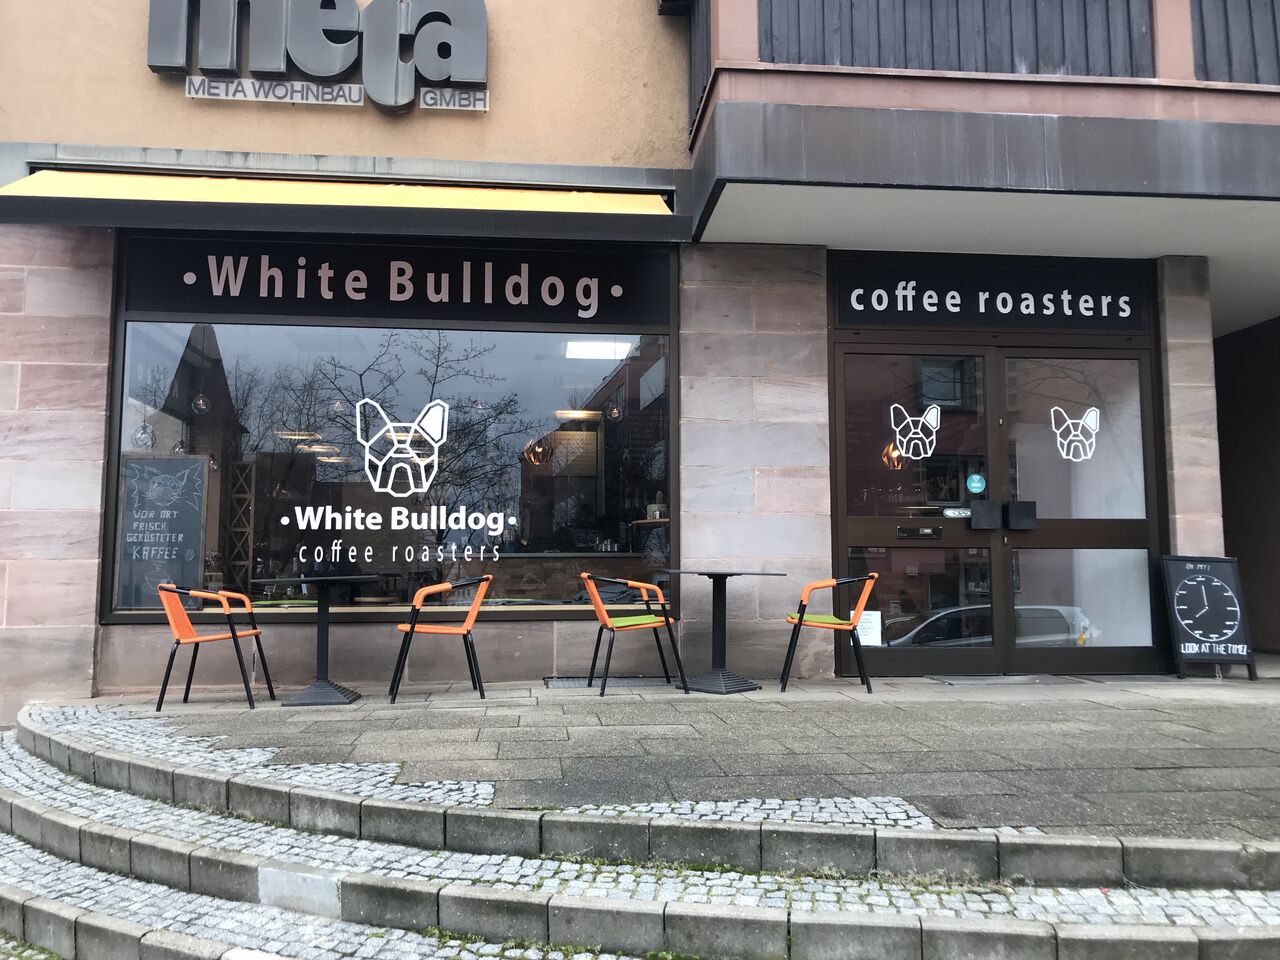 A photo of White Bulldog Coffee Roasters